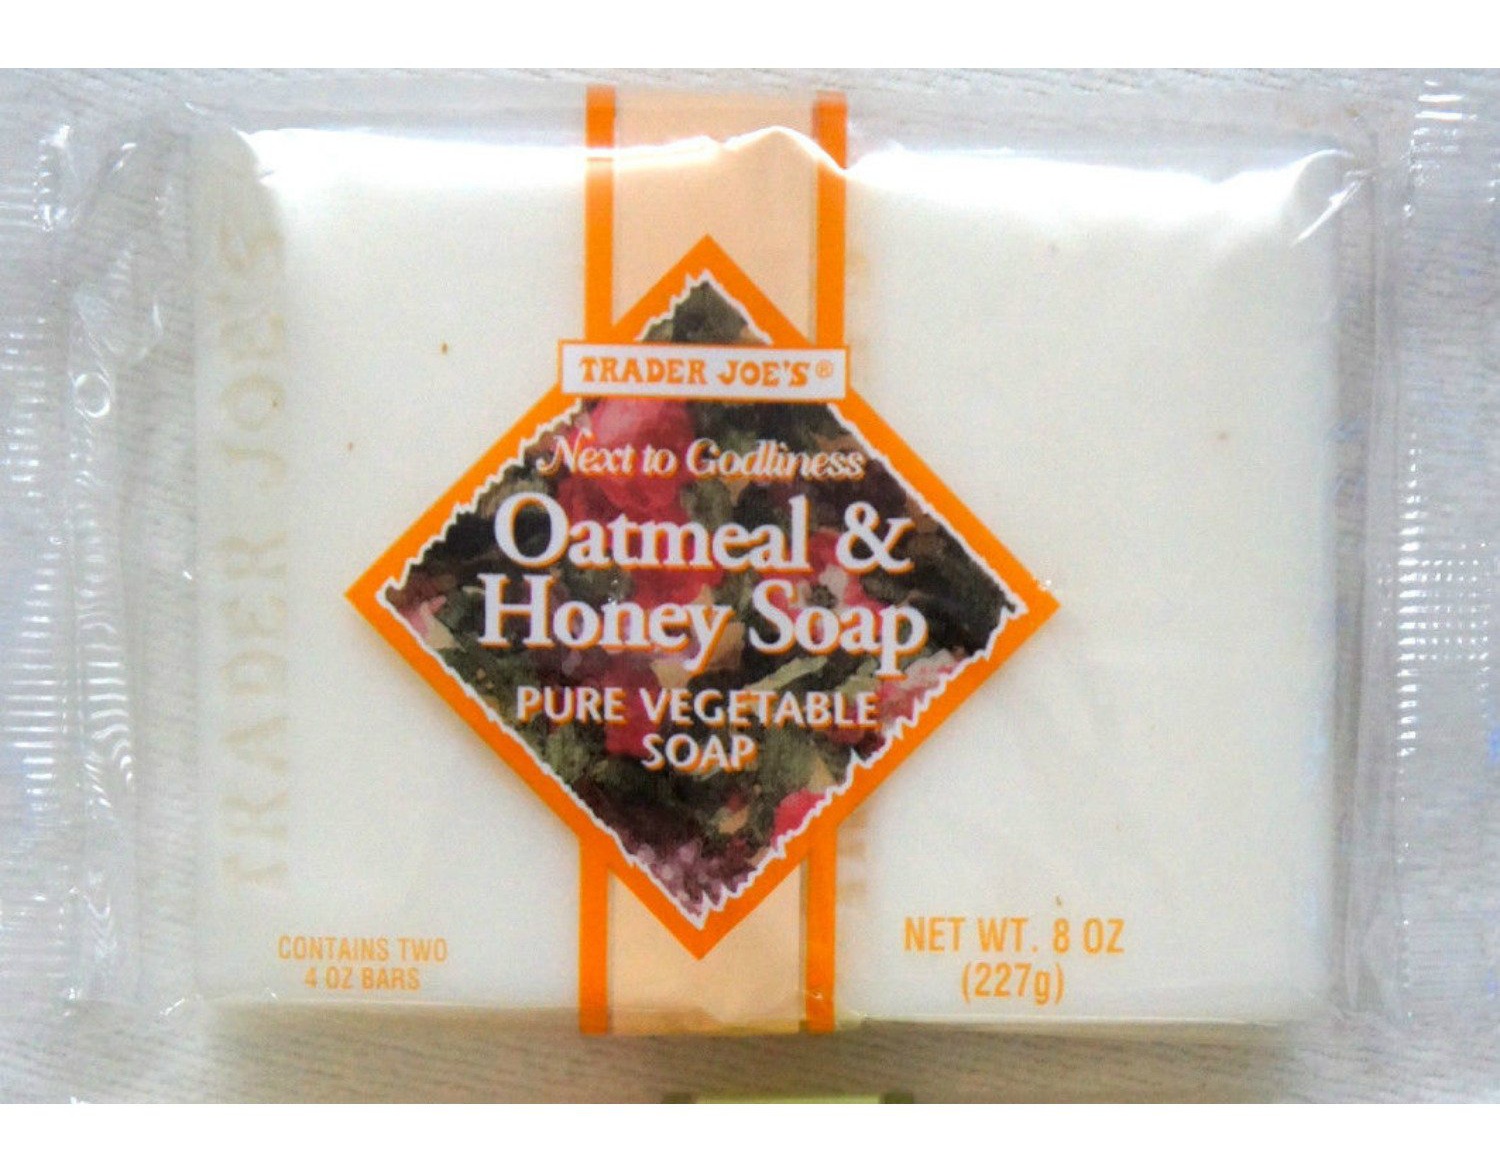 Trader Joe's Oatmeal & Honey Soap